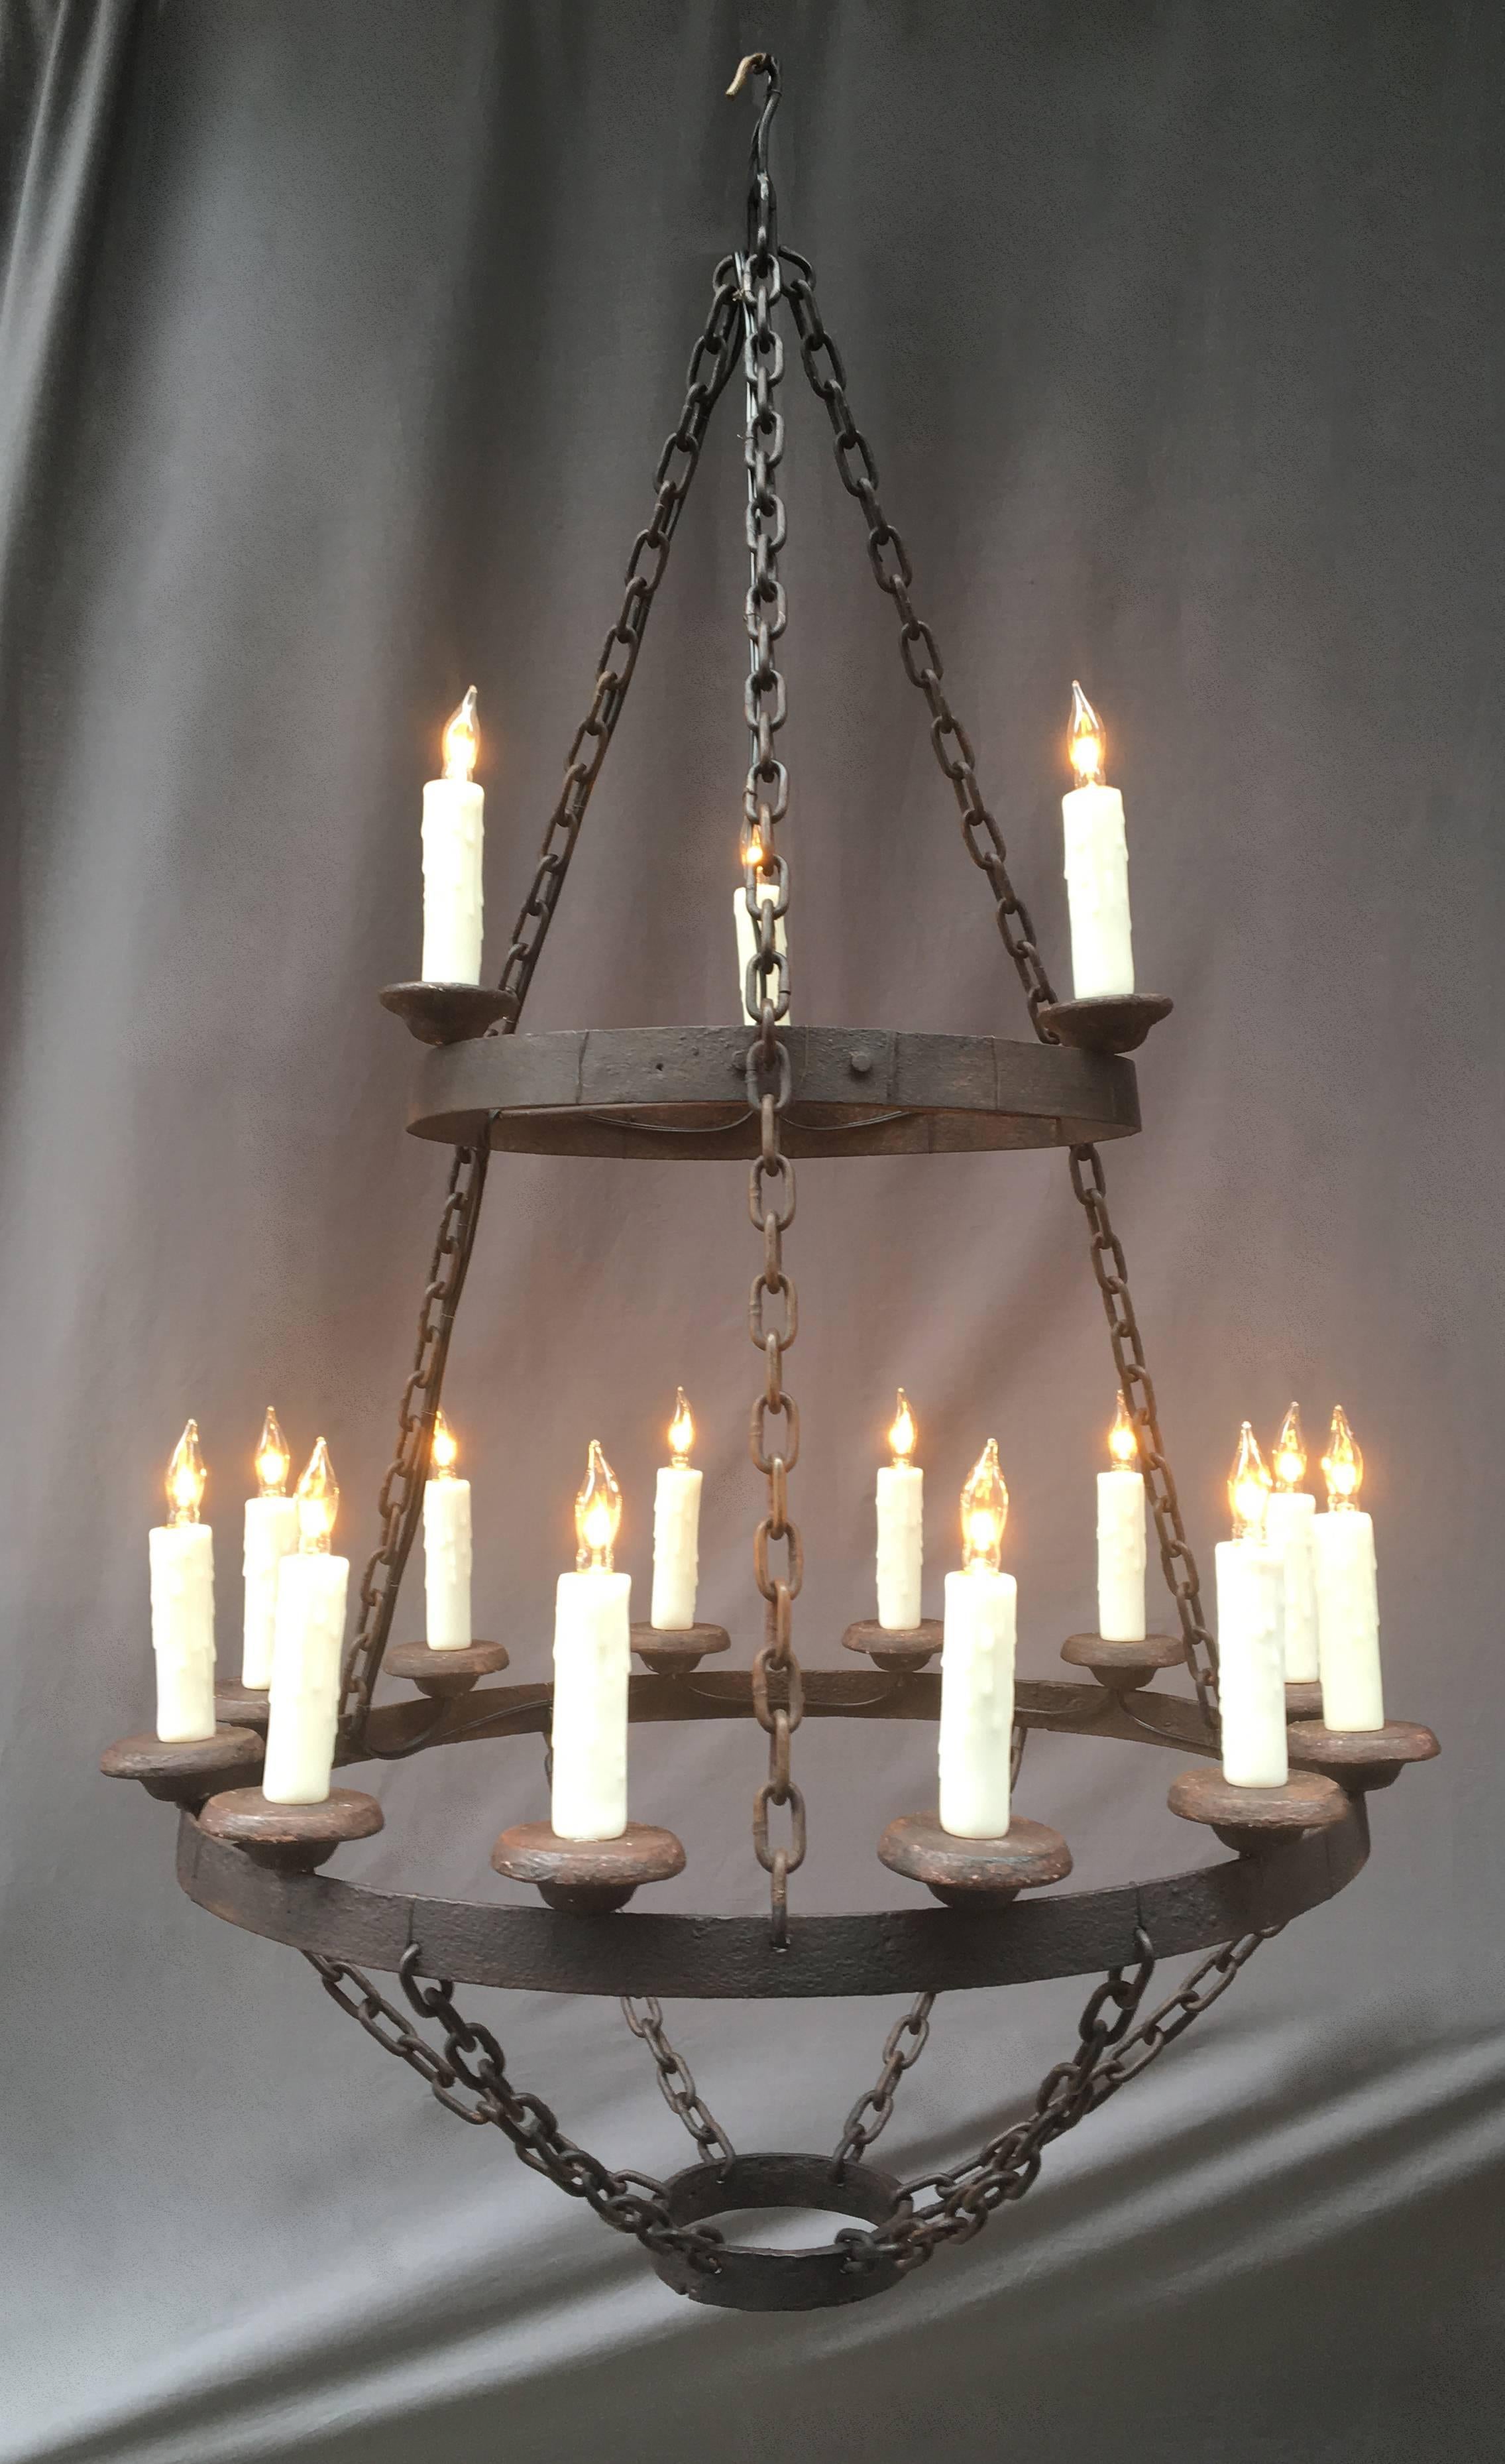 18th century French originally pricket iron chandelier.